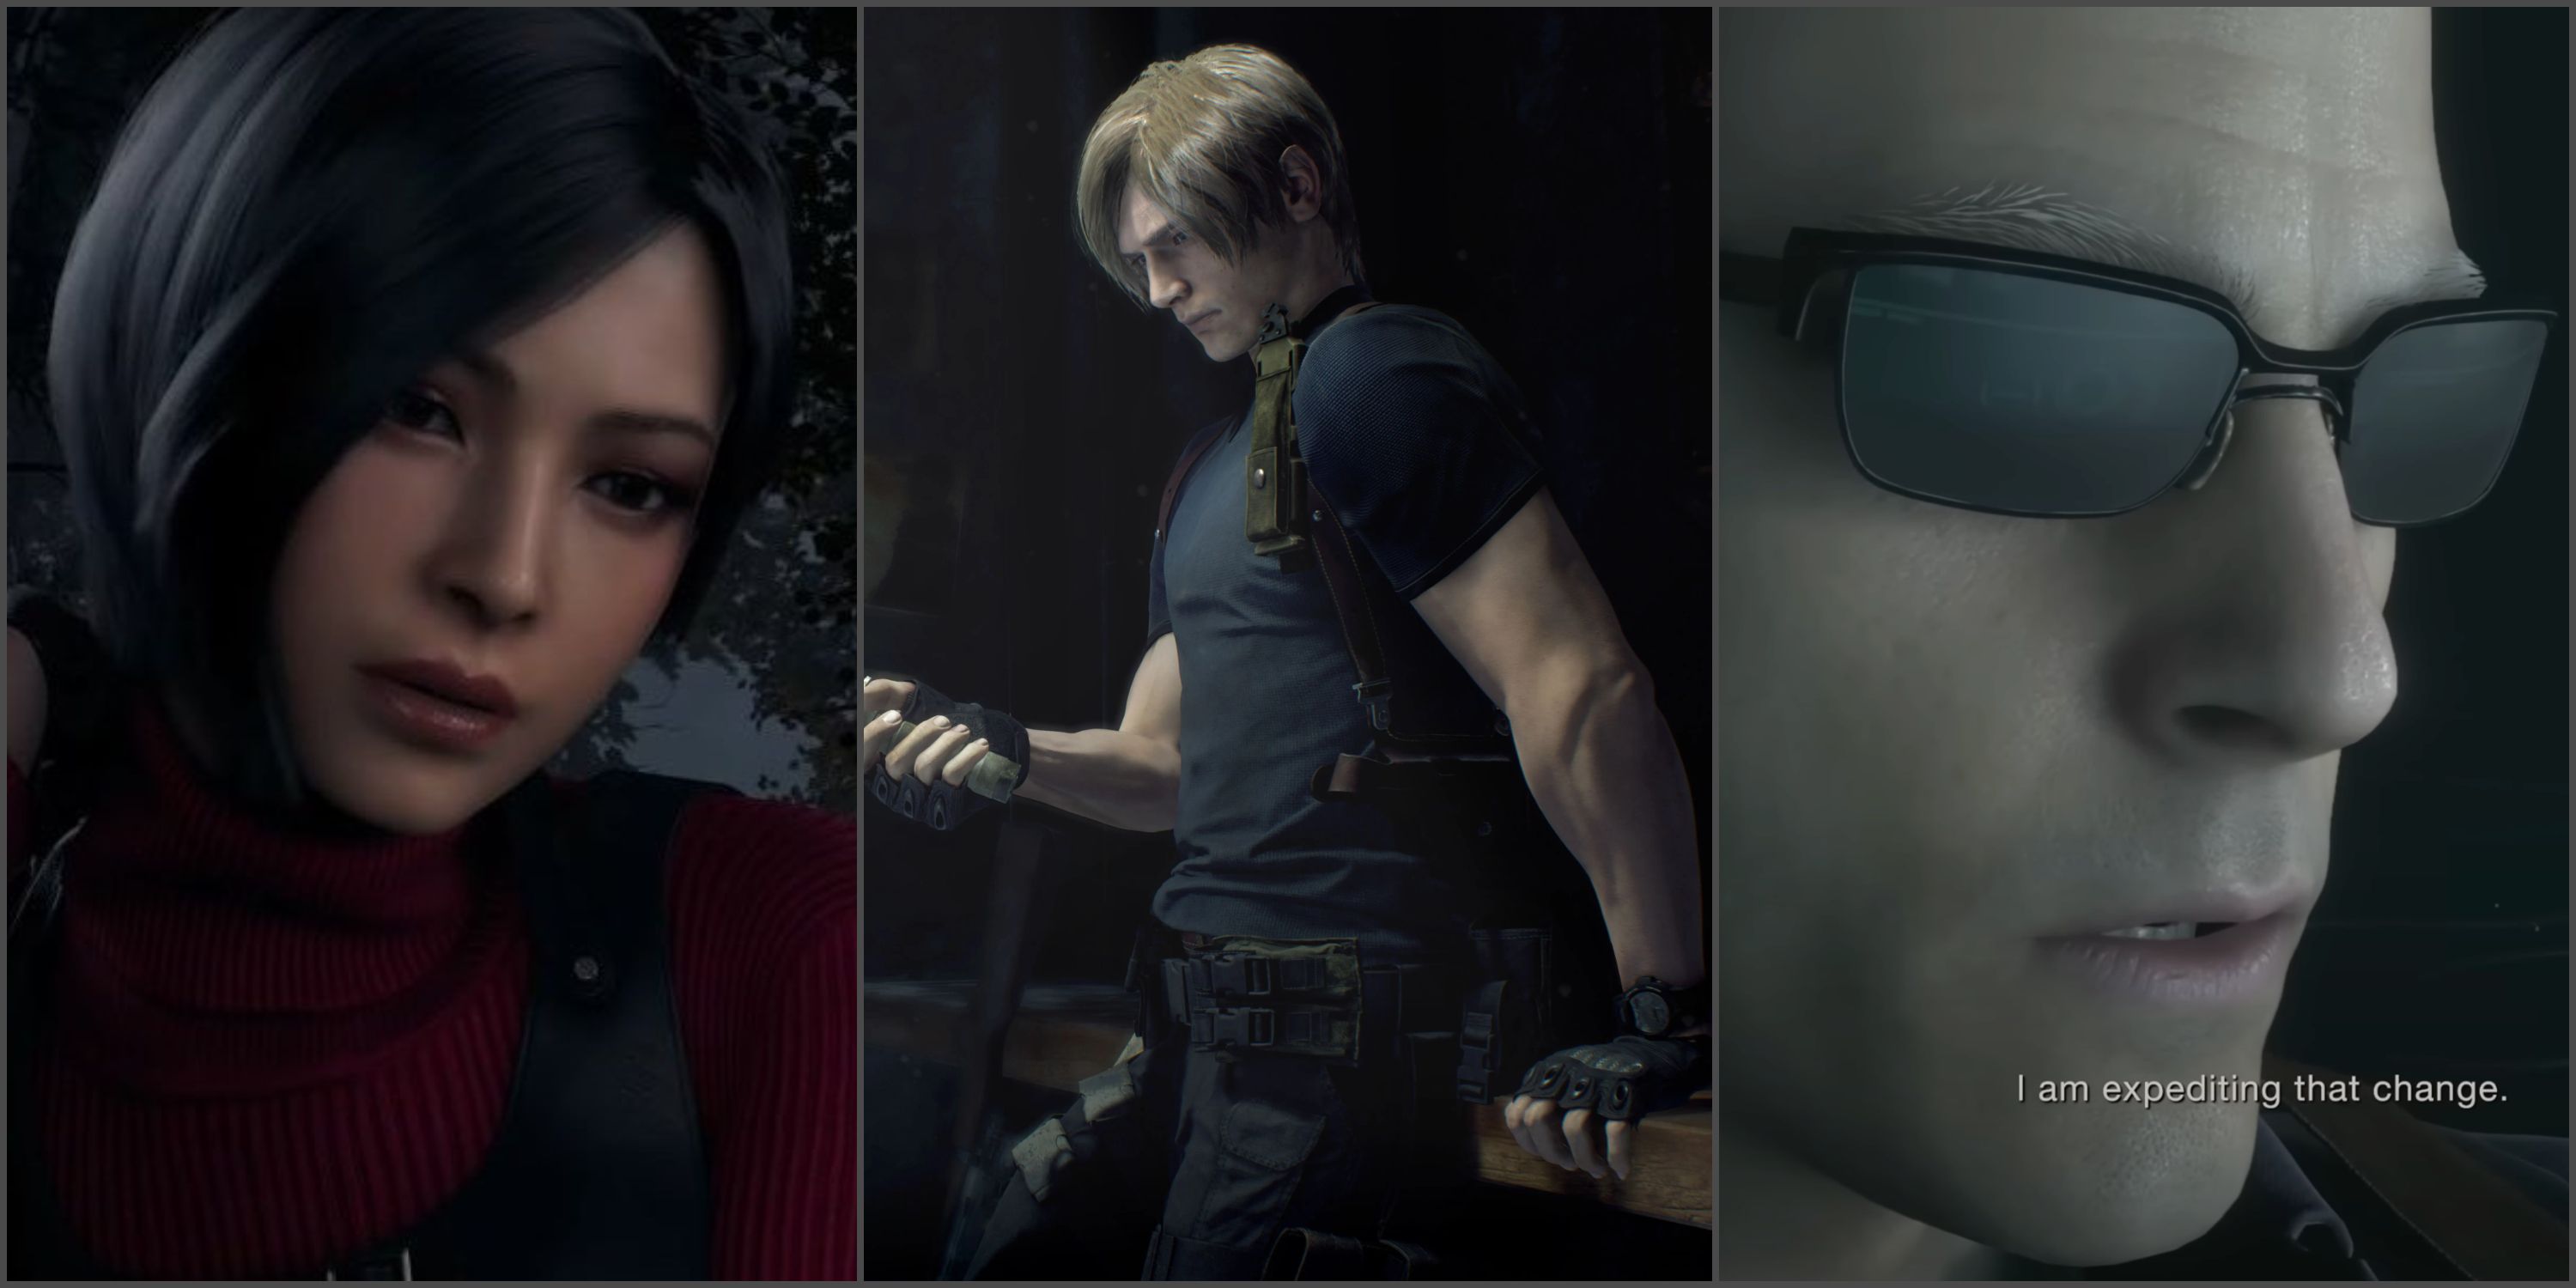 Resident Evil 4 Remake: Ada Wong, Leon S. Kennedy, and Albert Wesker